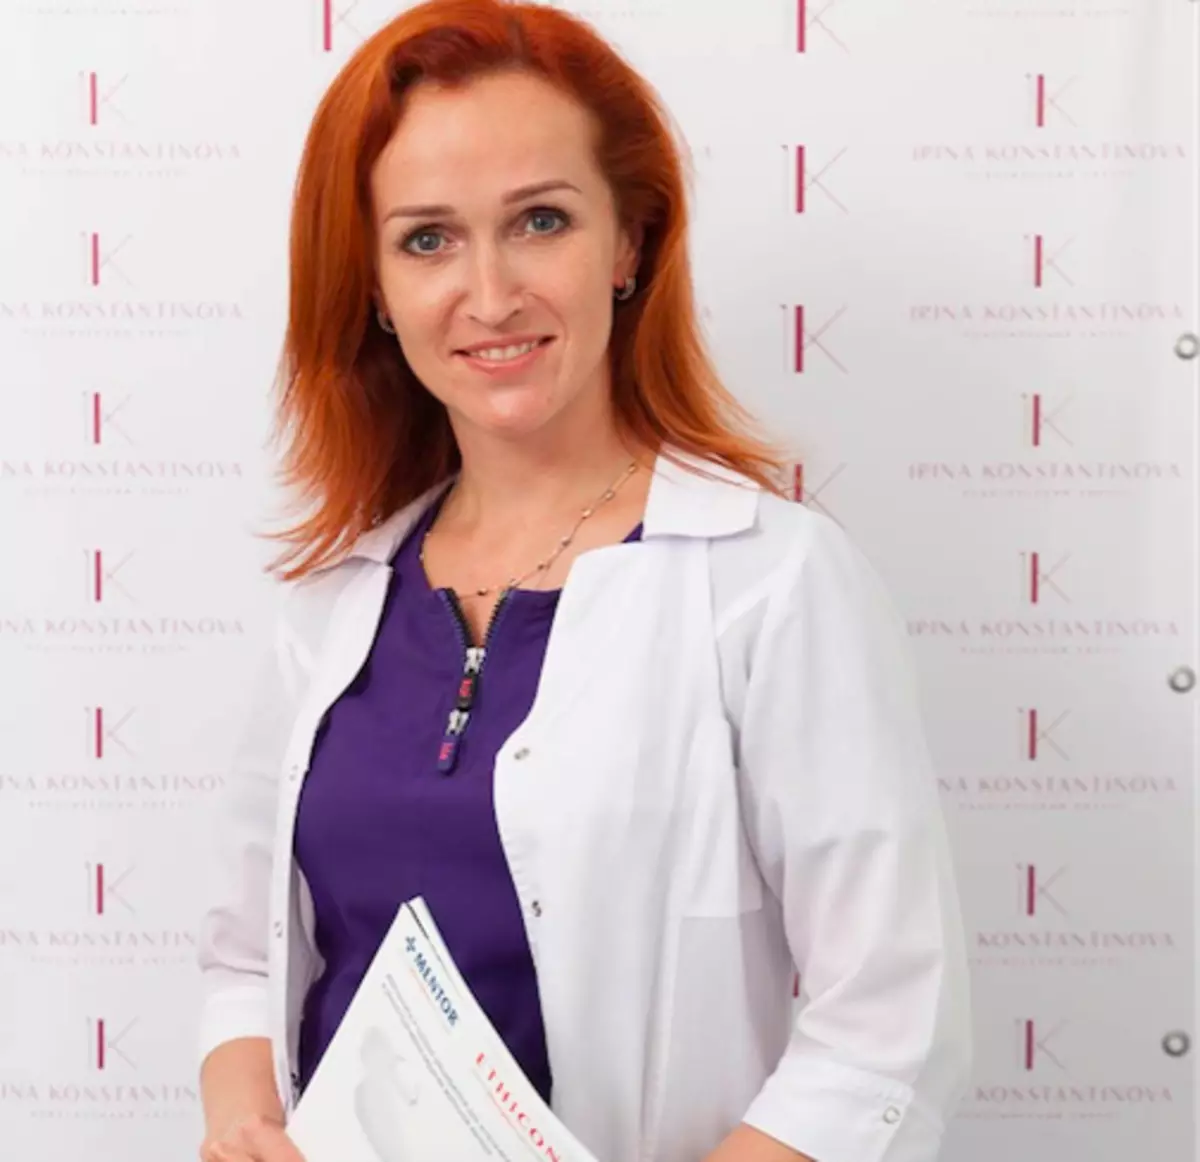 Muovinen kirurgi Irina Konstantinova